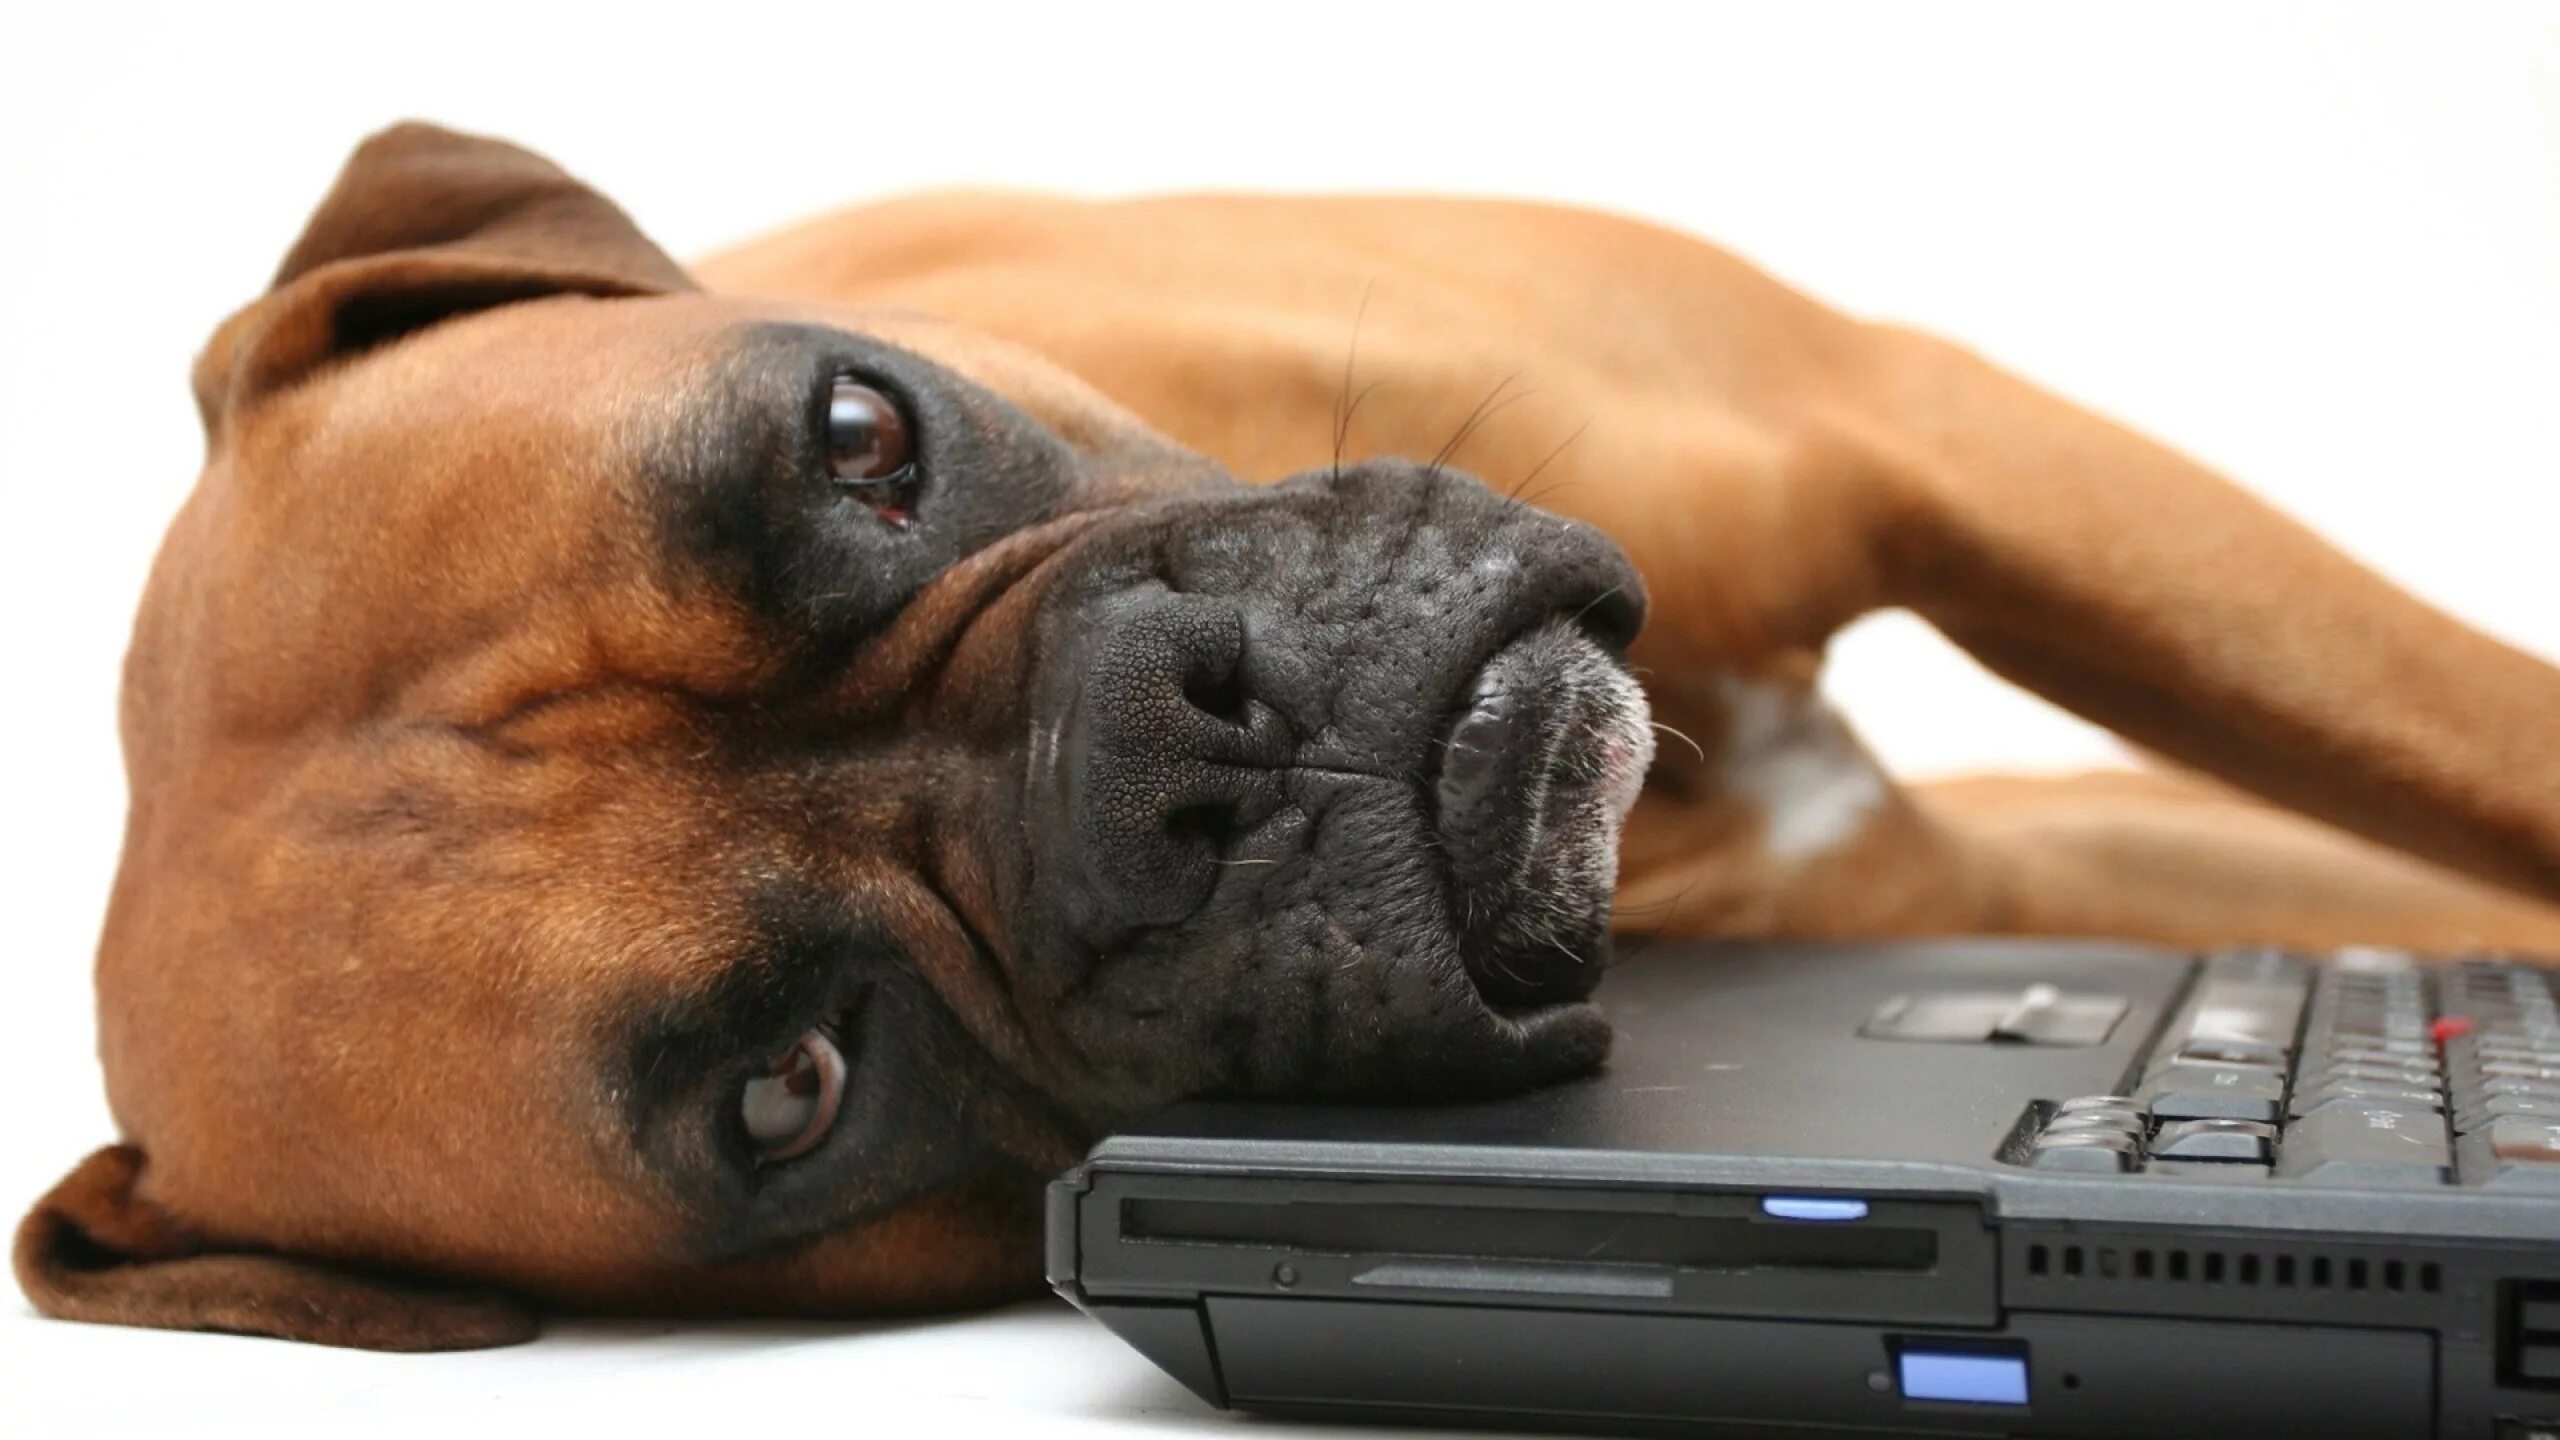 Картинка на заставку ноутбука. Уставшая собака. Картинки на рабочий стол собаки. Собака с компьютером. Заставка на ноутбук.